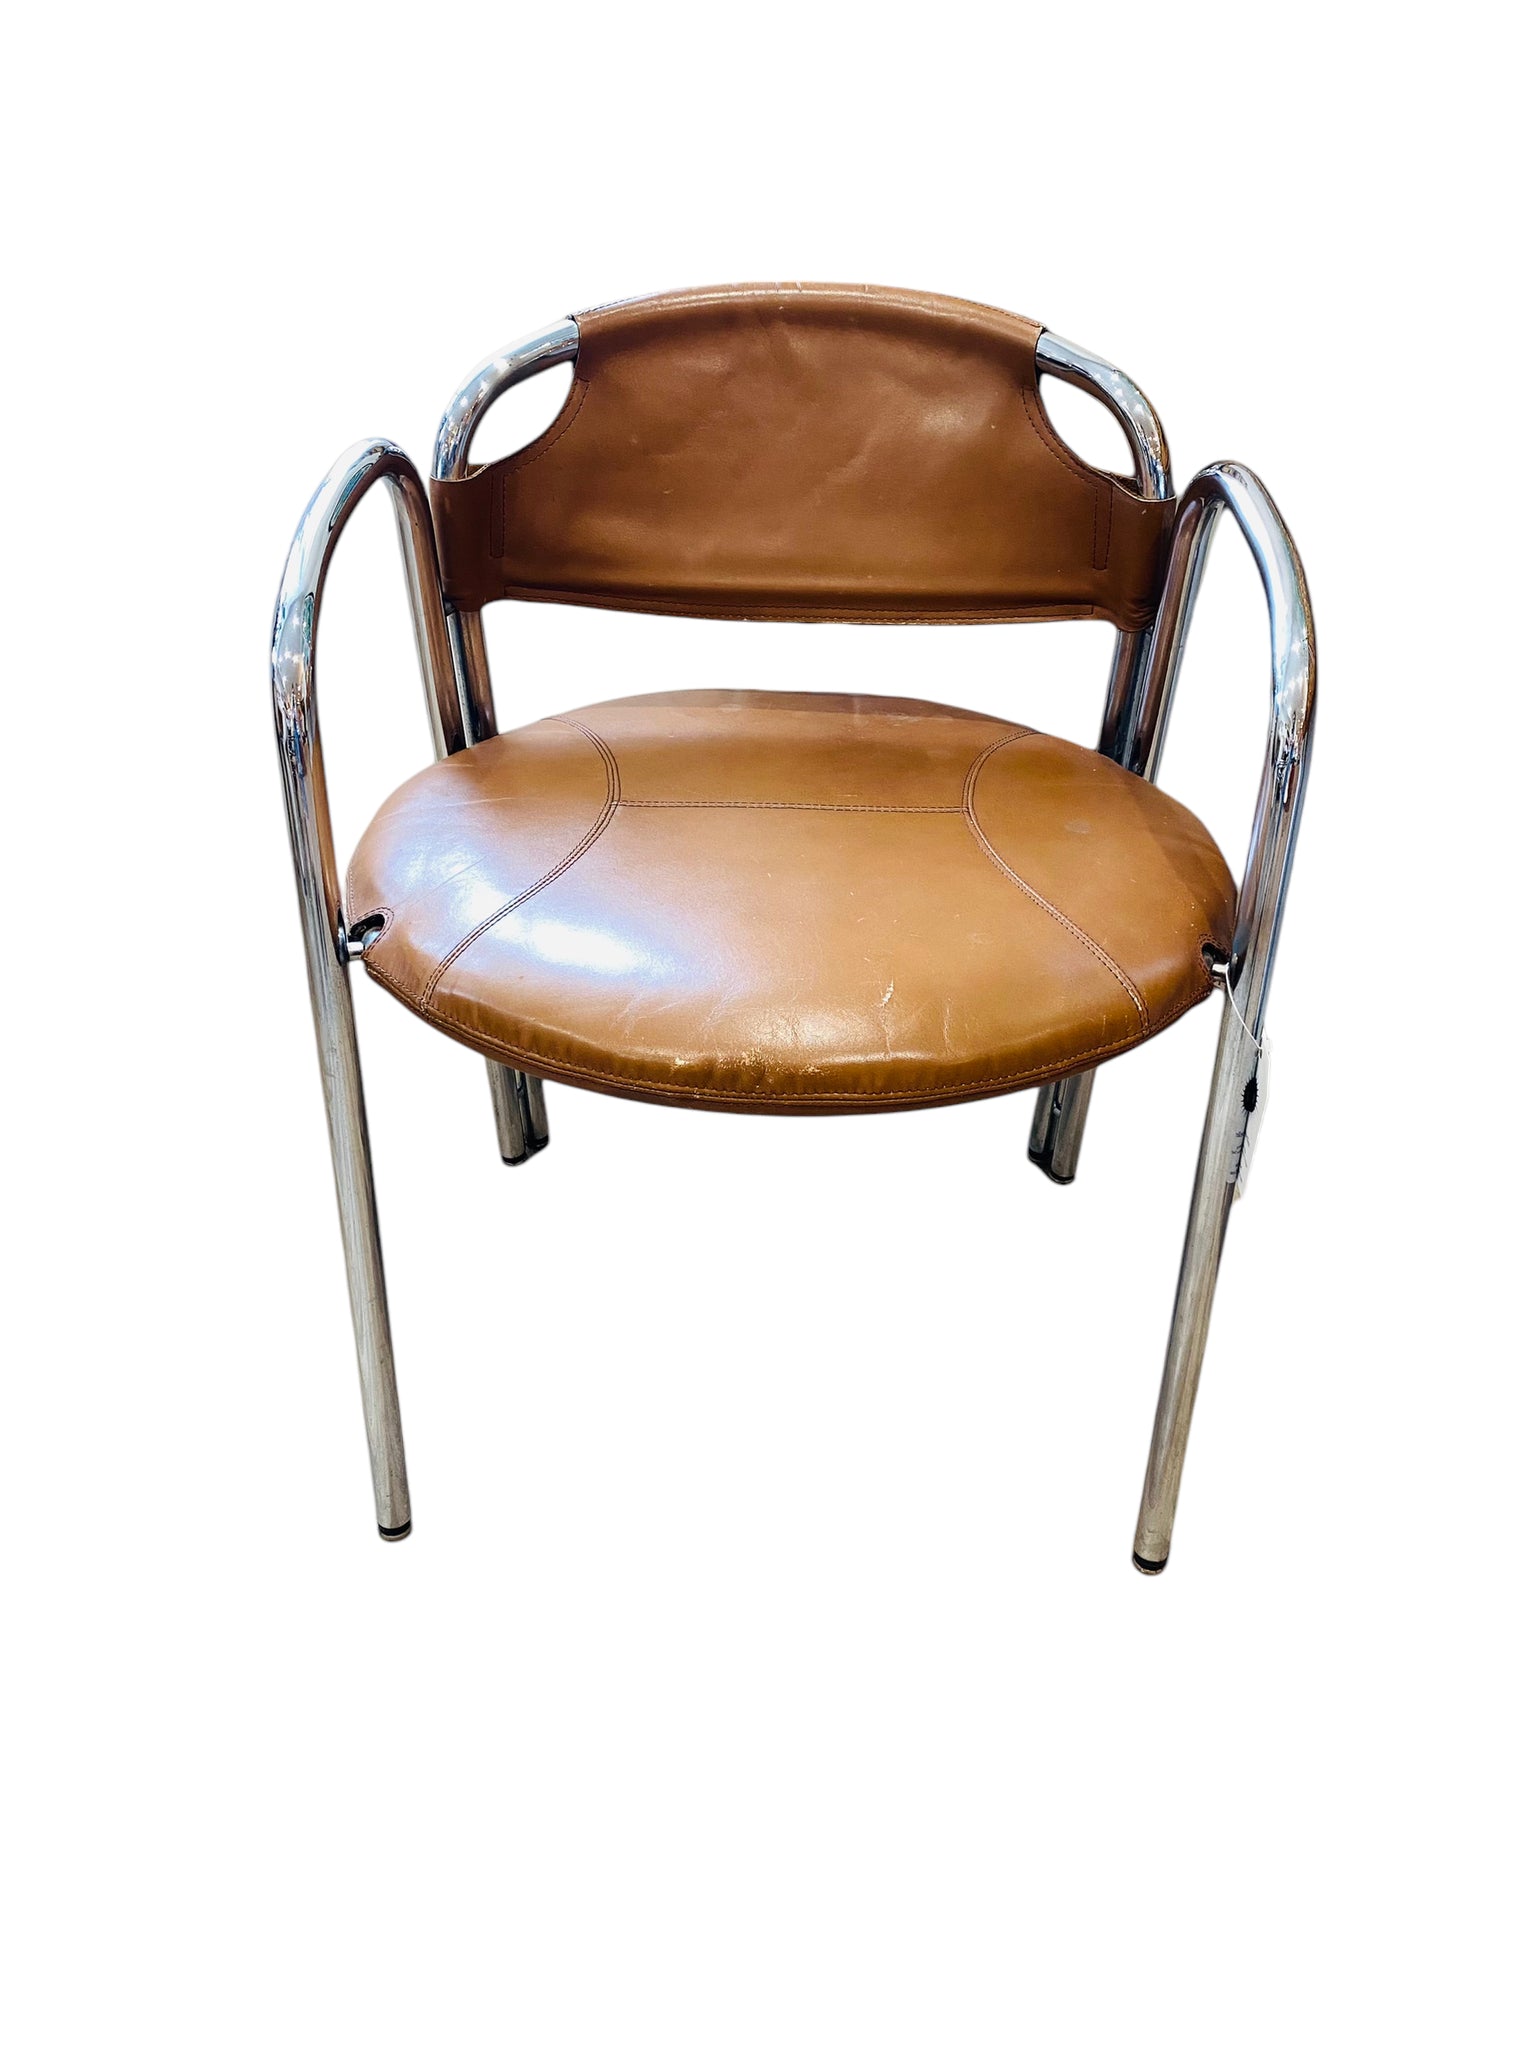 Vintage 1970’s Gastone Rinaldi “La Doppietta” Chair